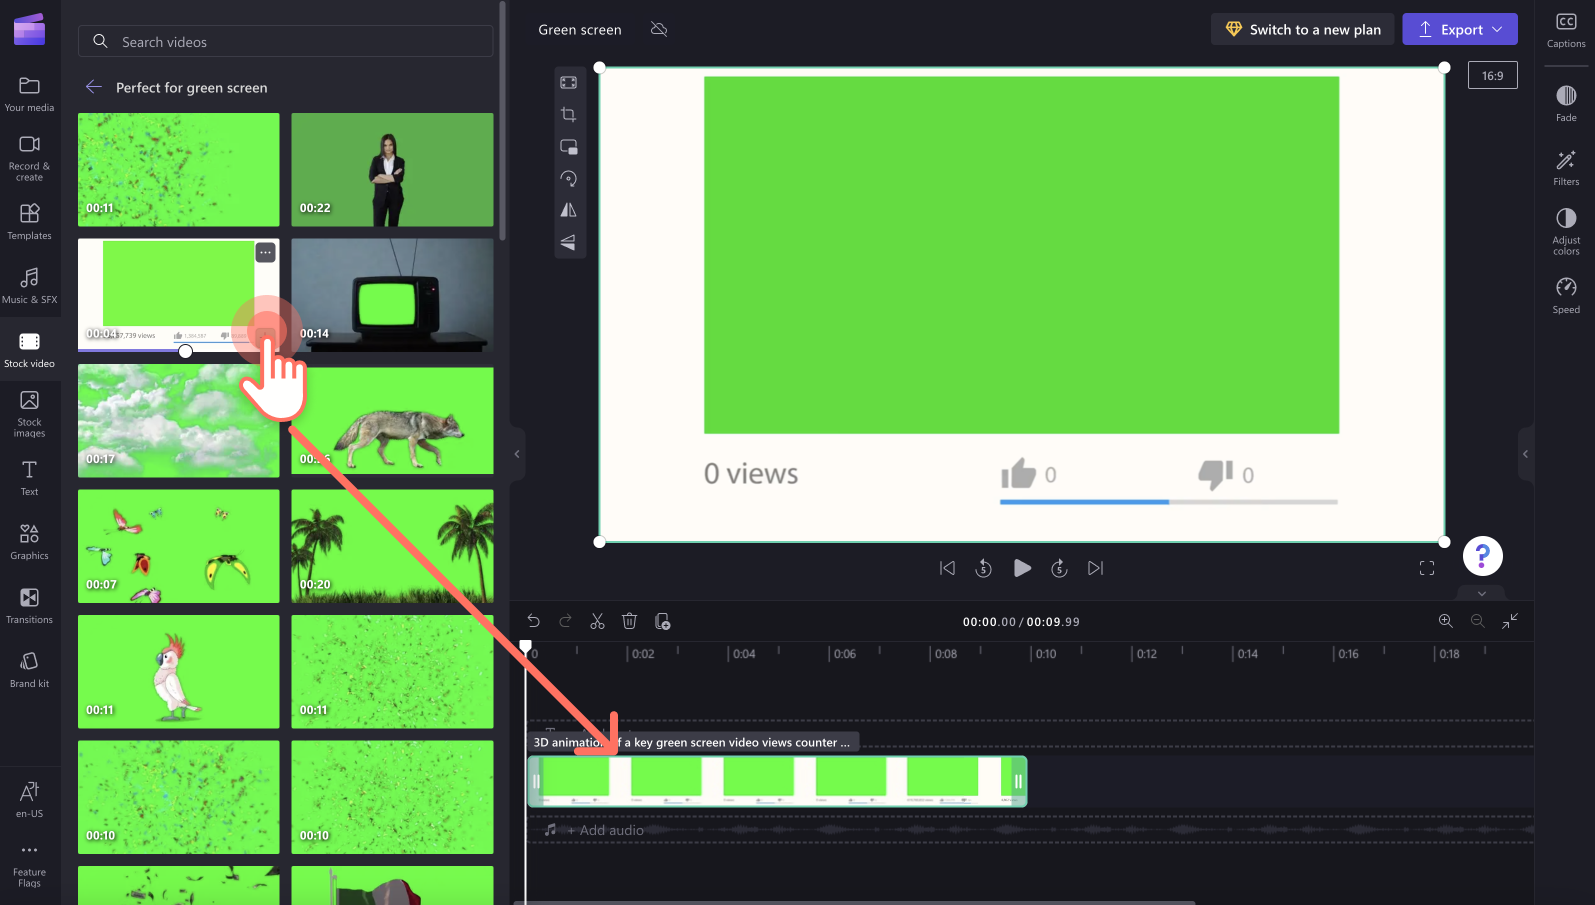 How to make green screen videos | Clipchamp Blog